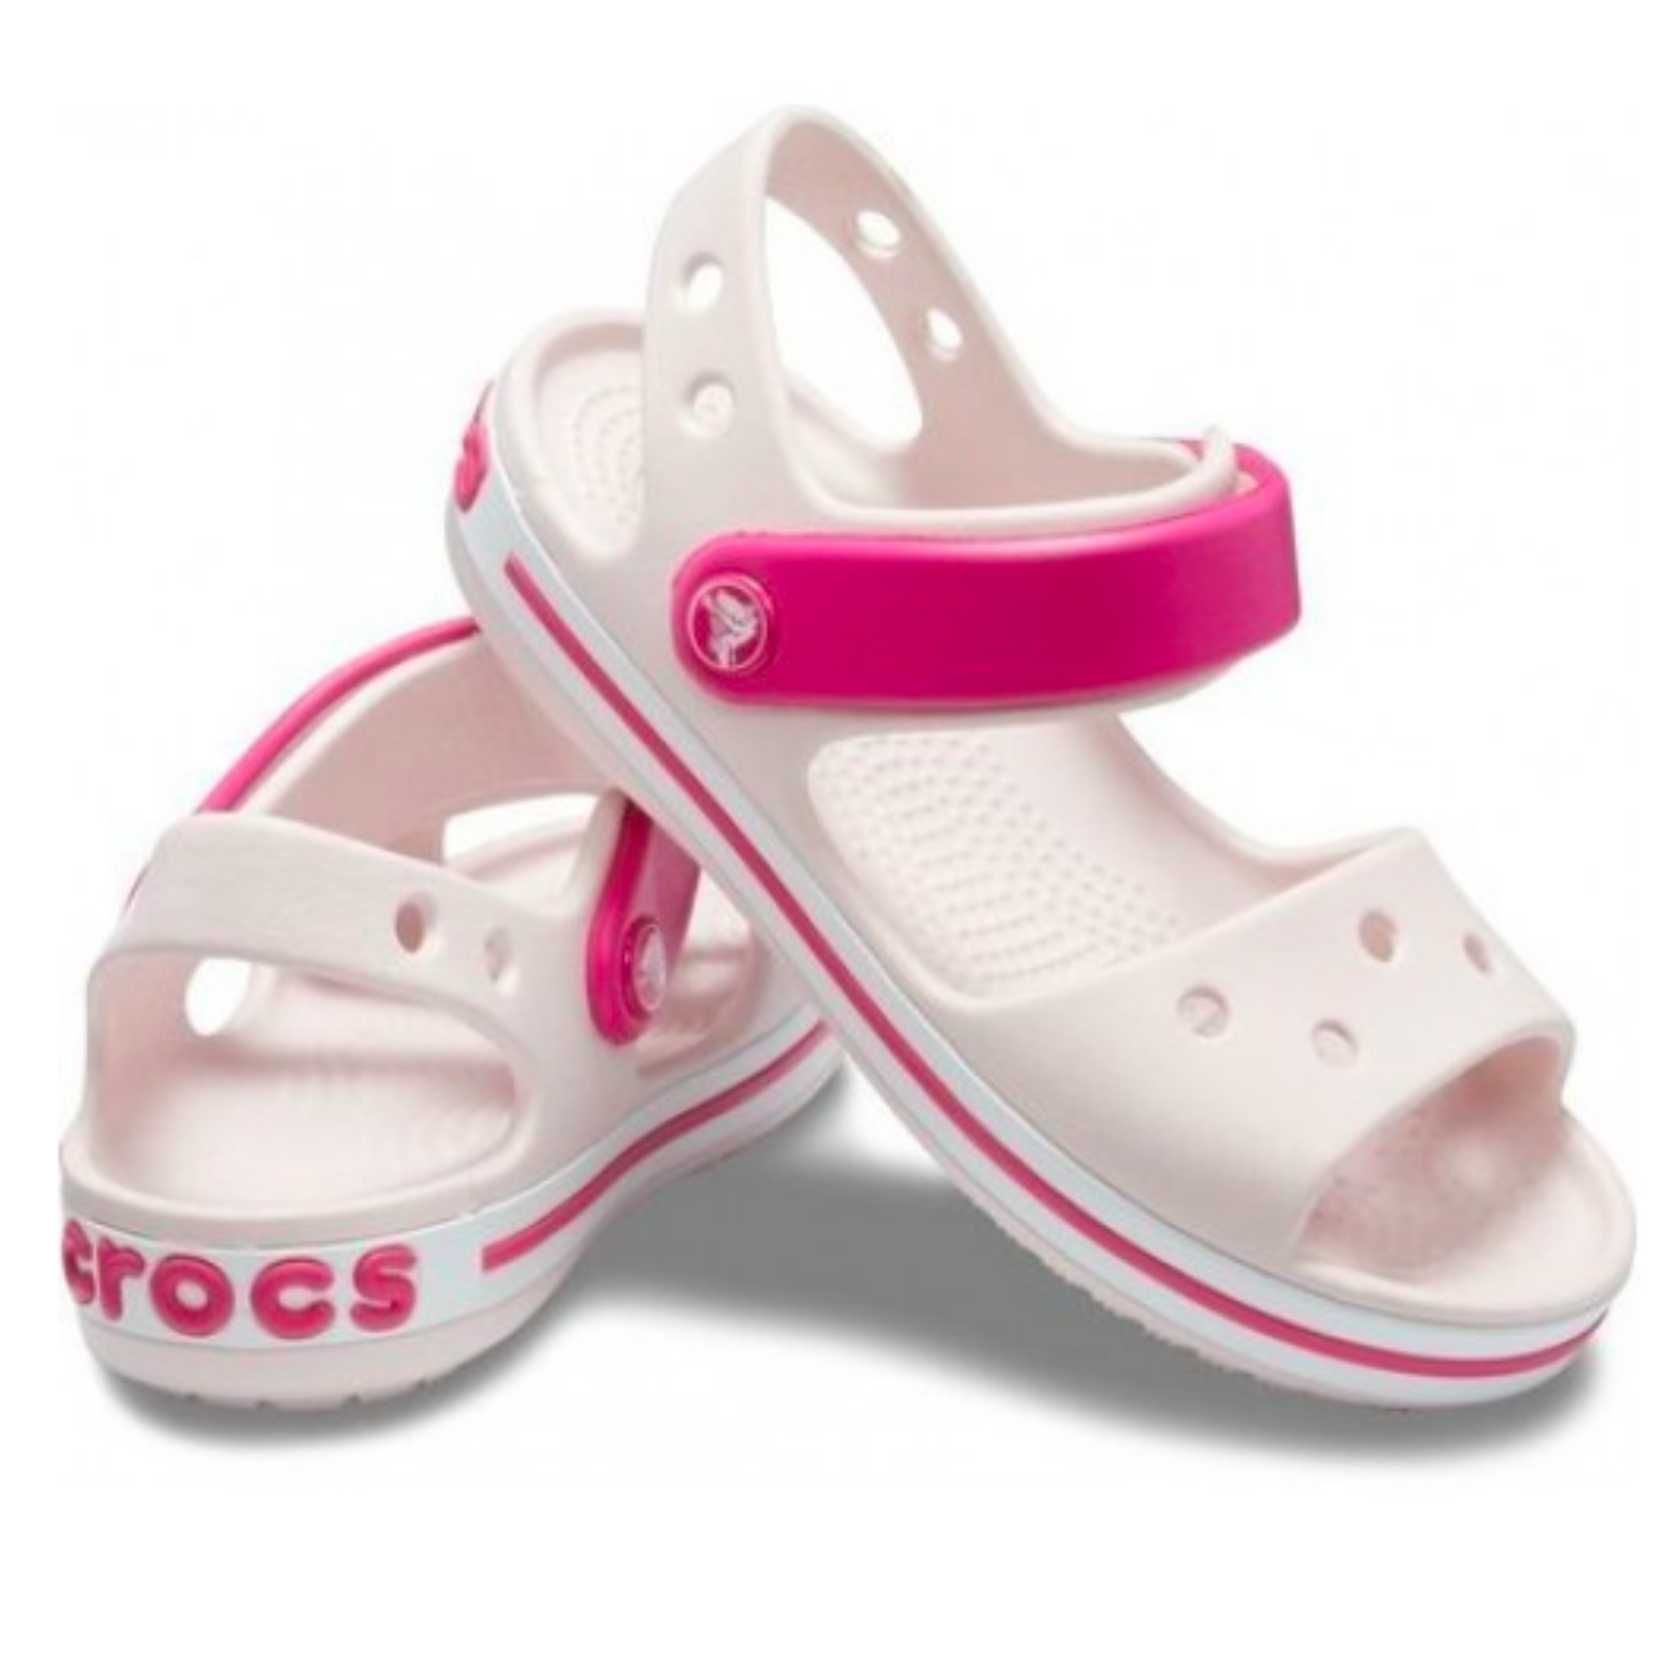 Crocs sandals kids Сандали крокс для деток. Лучшее качество!